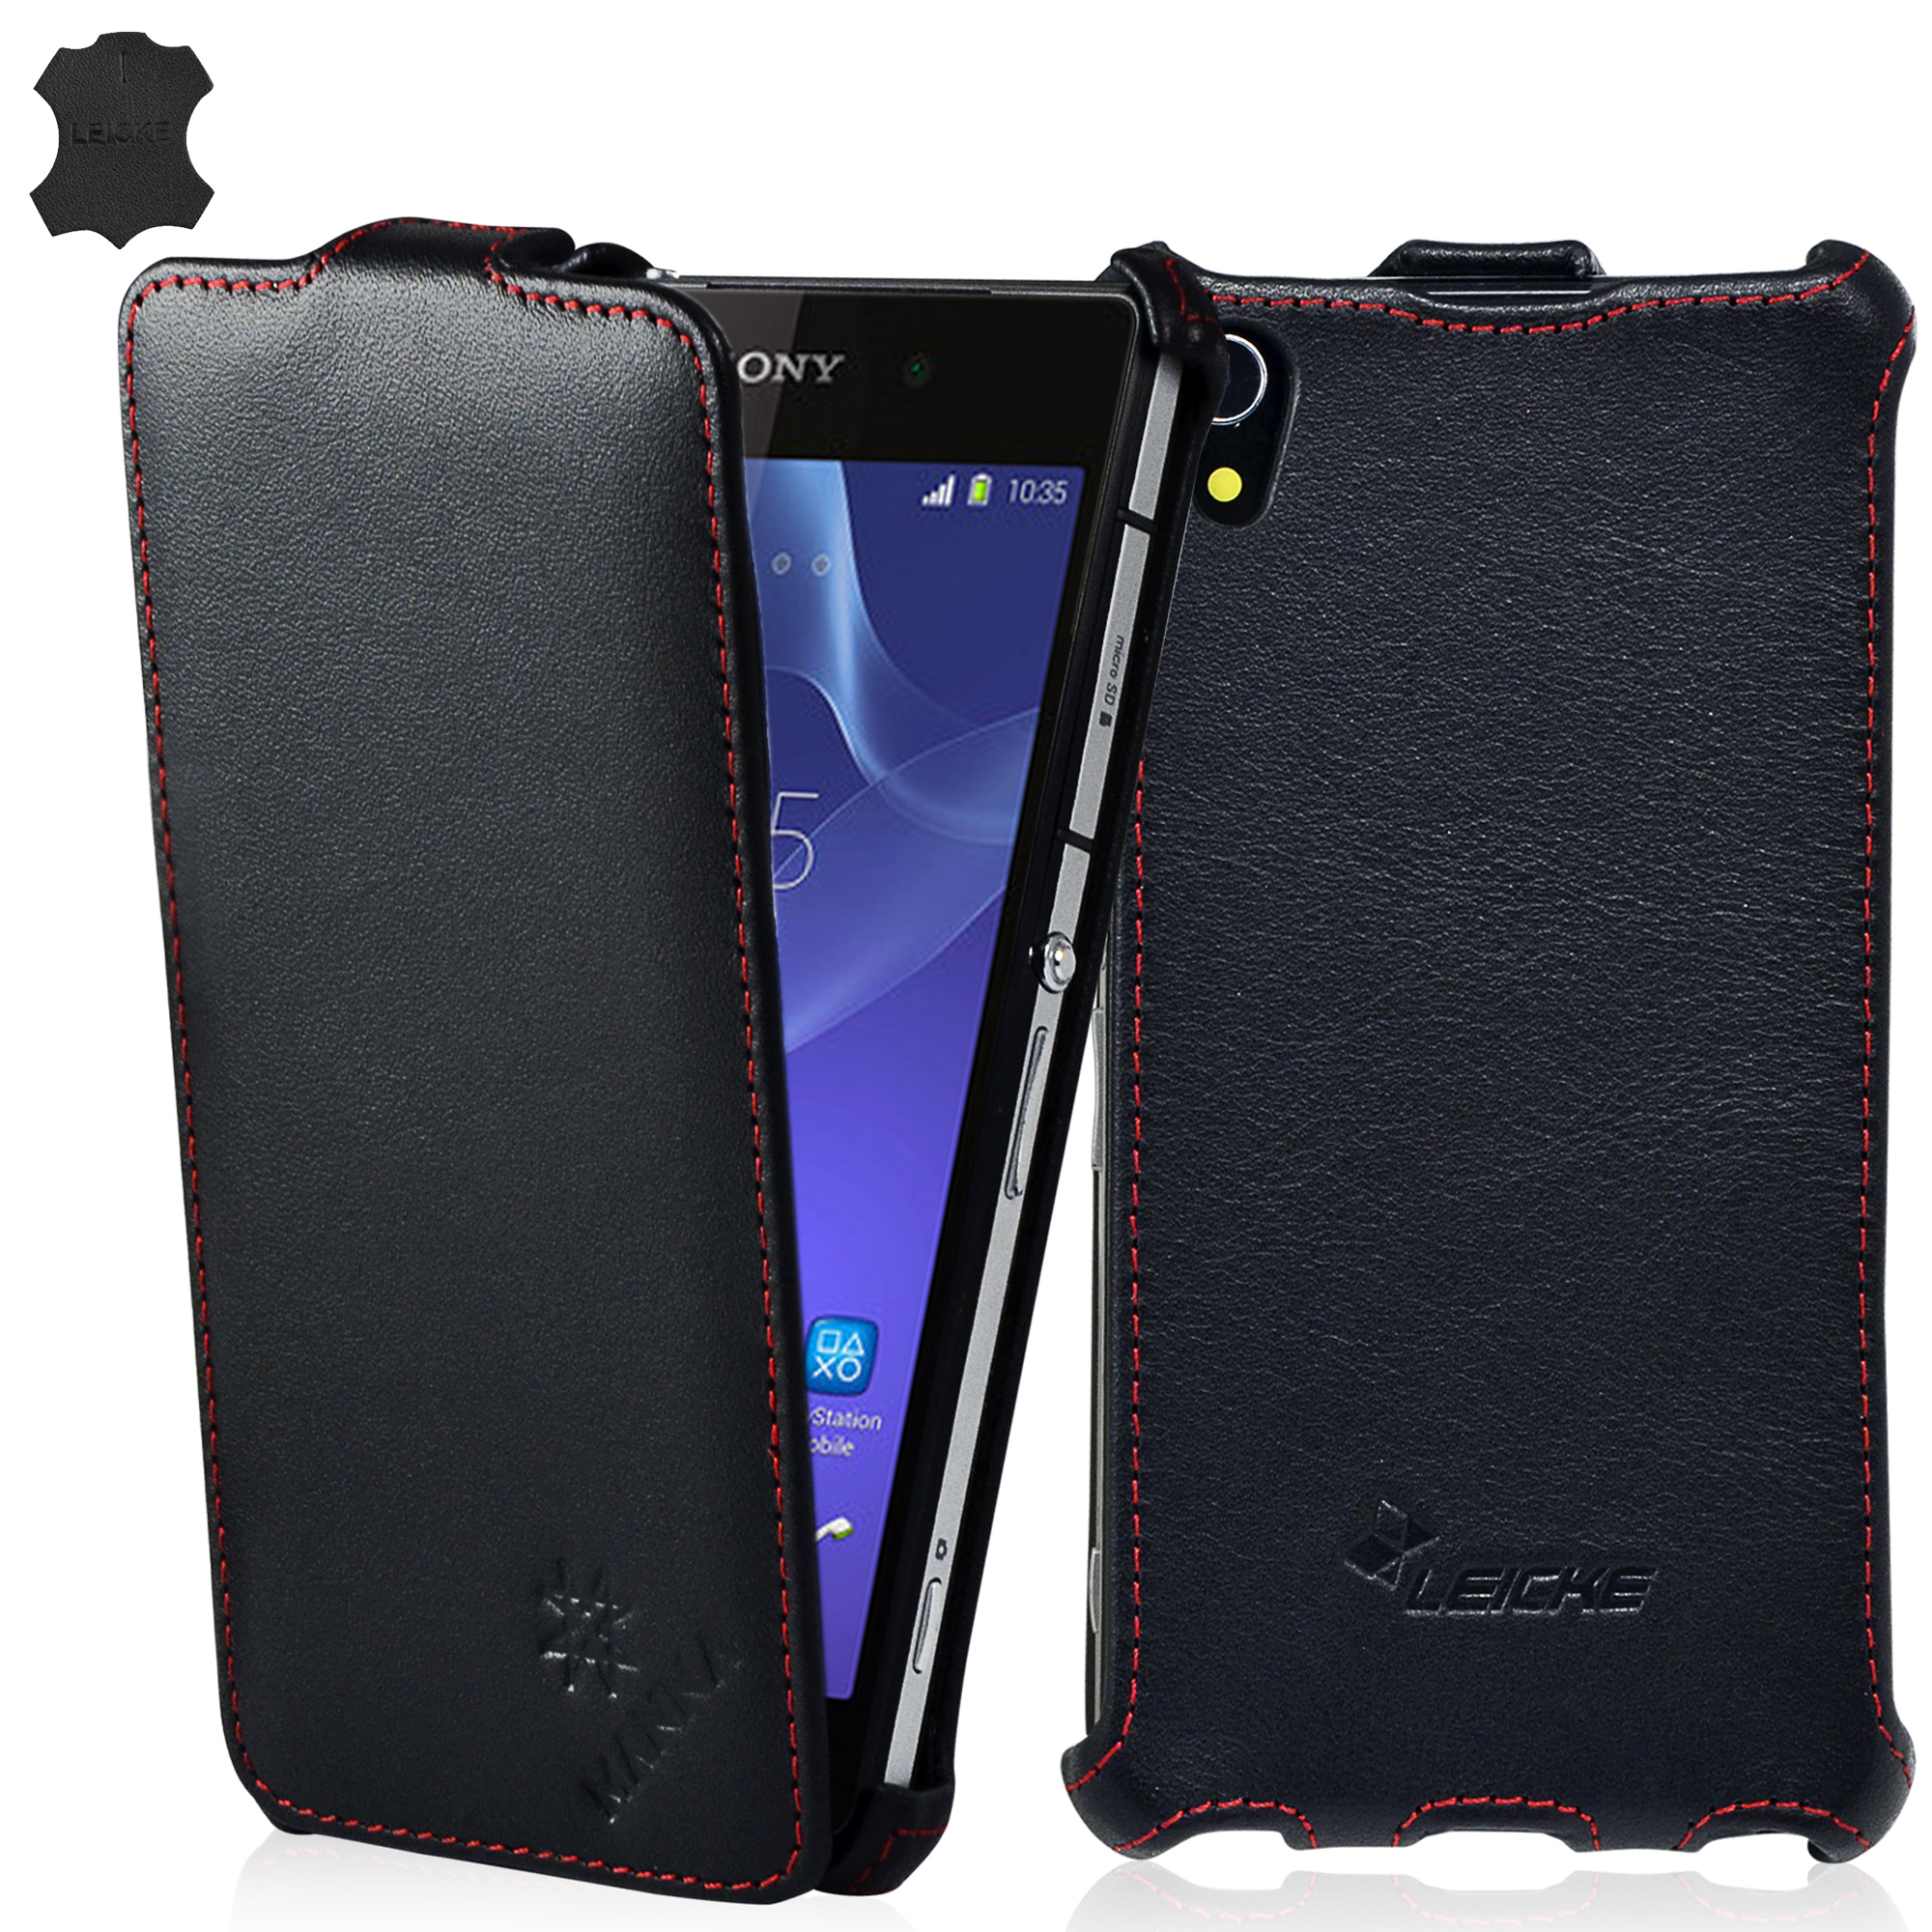 | UltraSlim Sony Xperia Z2 Flip Case | Finest Nappa